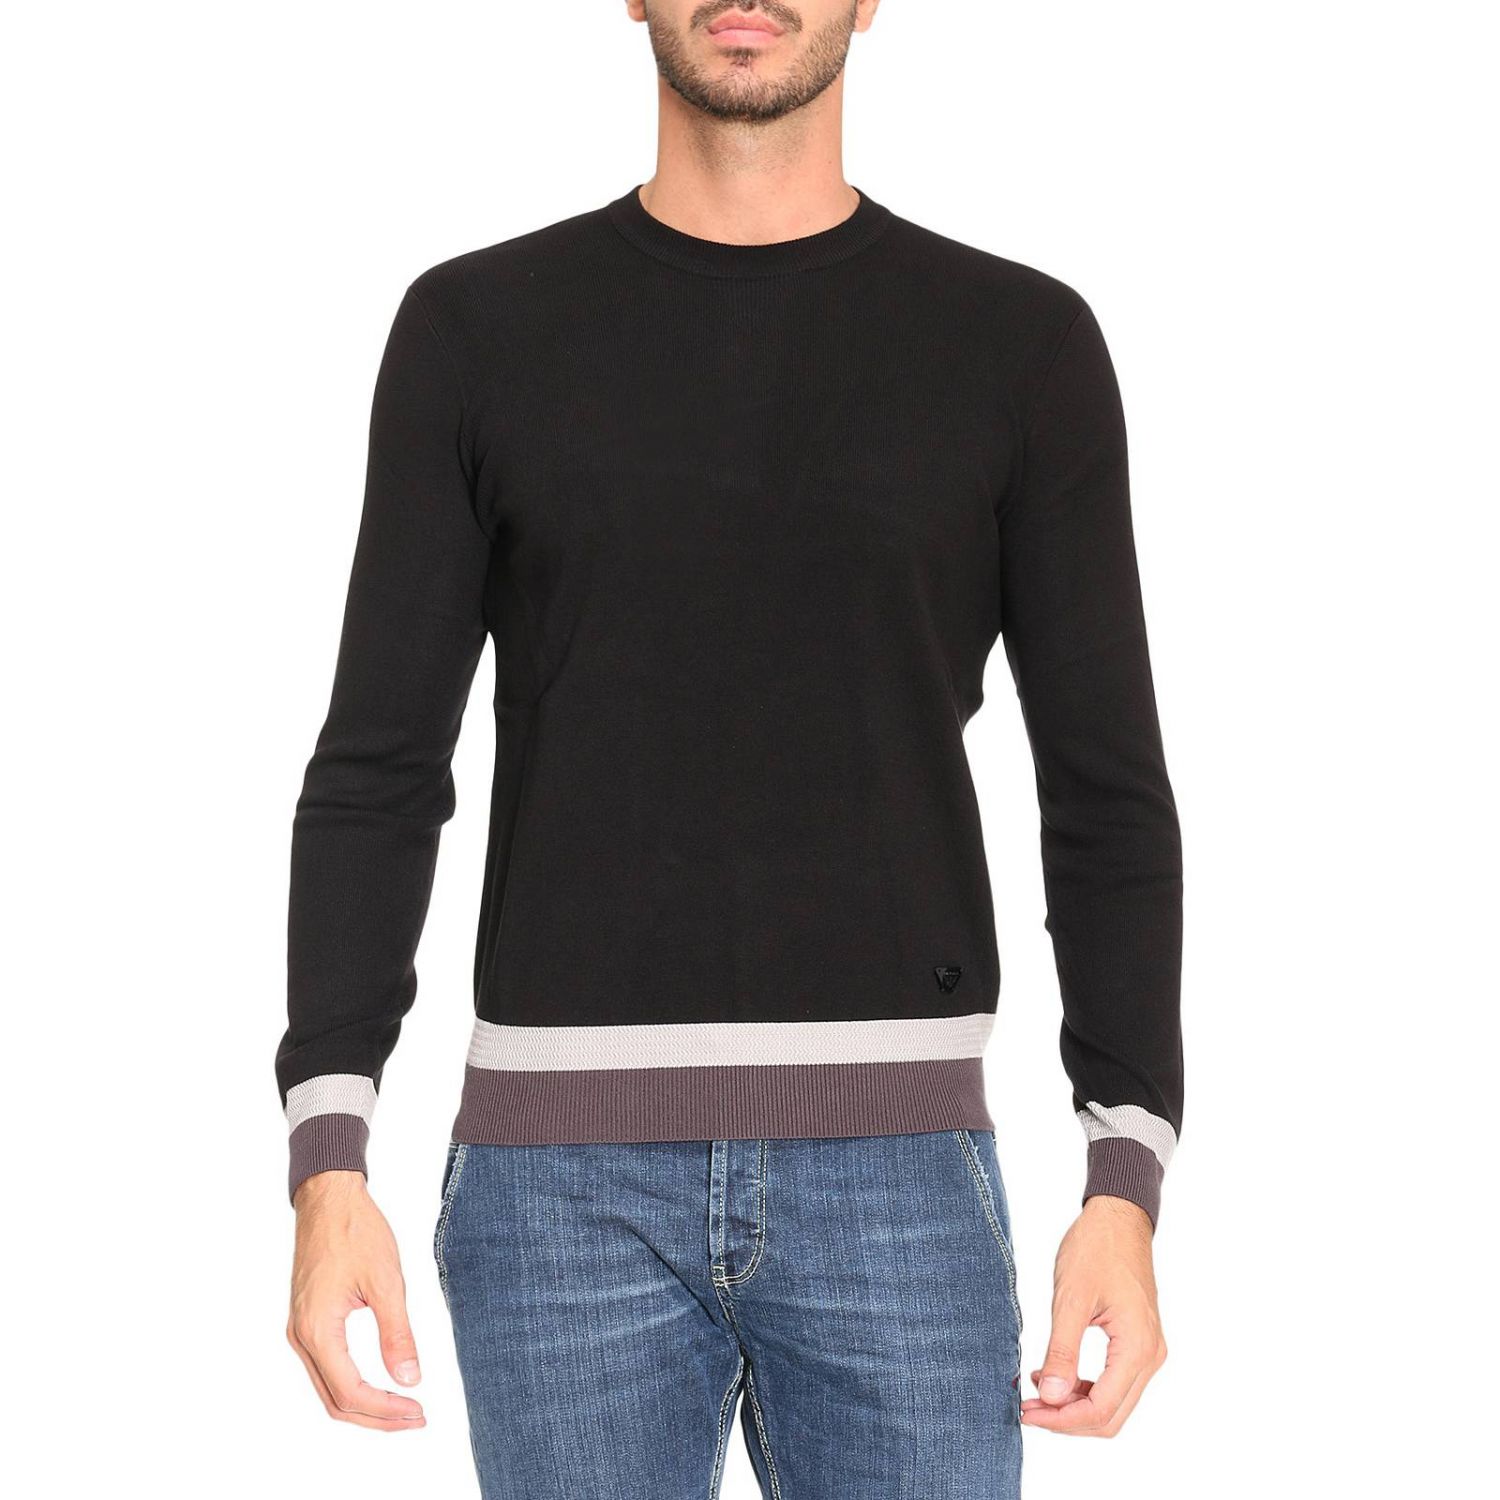 Armani Jeans Outlet: Sweater men | Sweater Armani Jeans Men Black ...